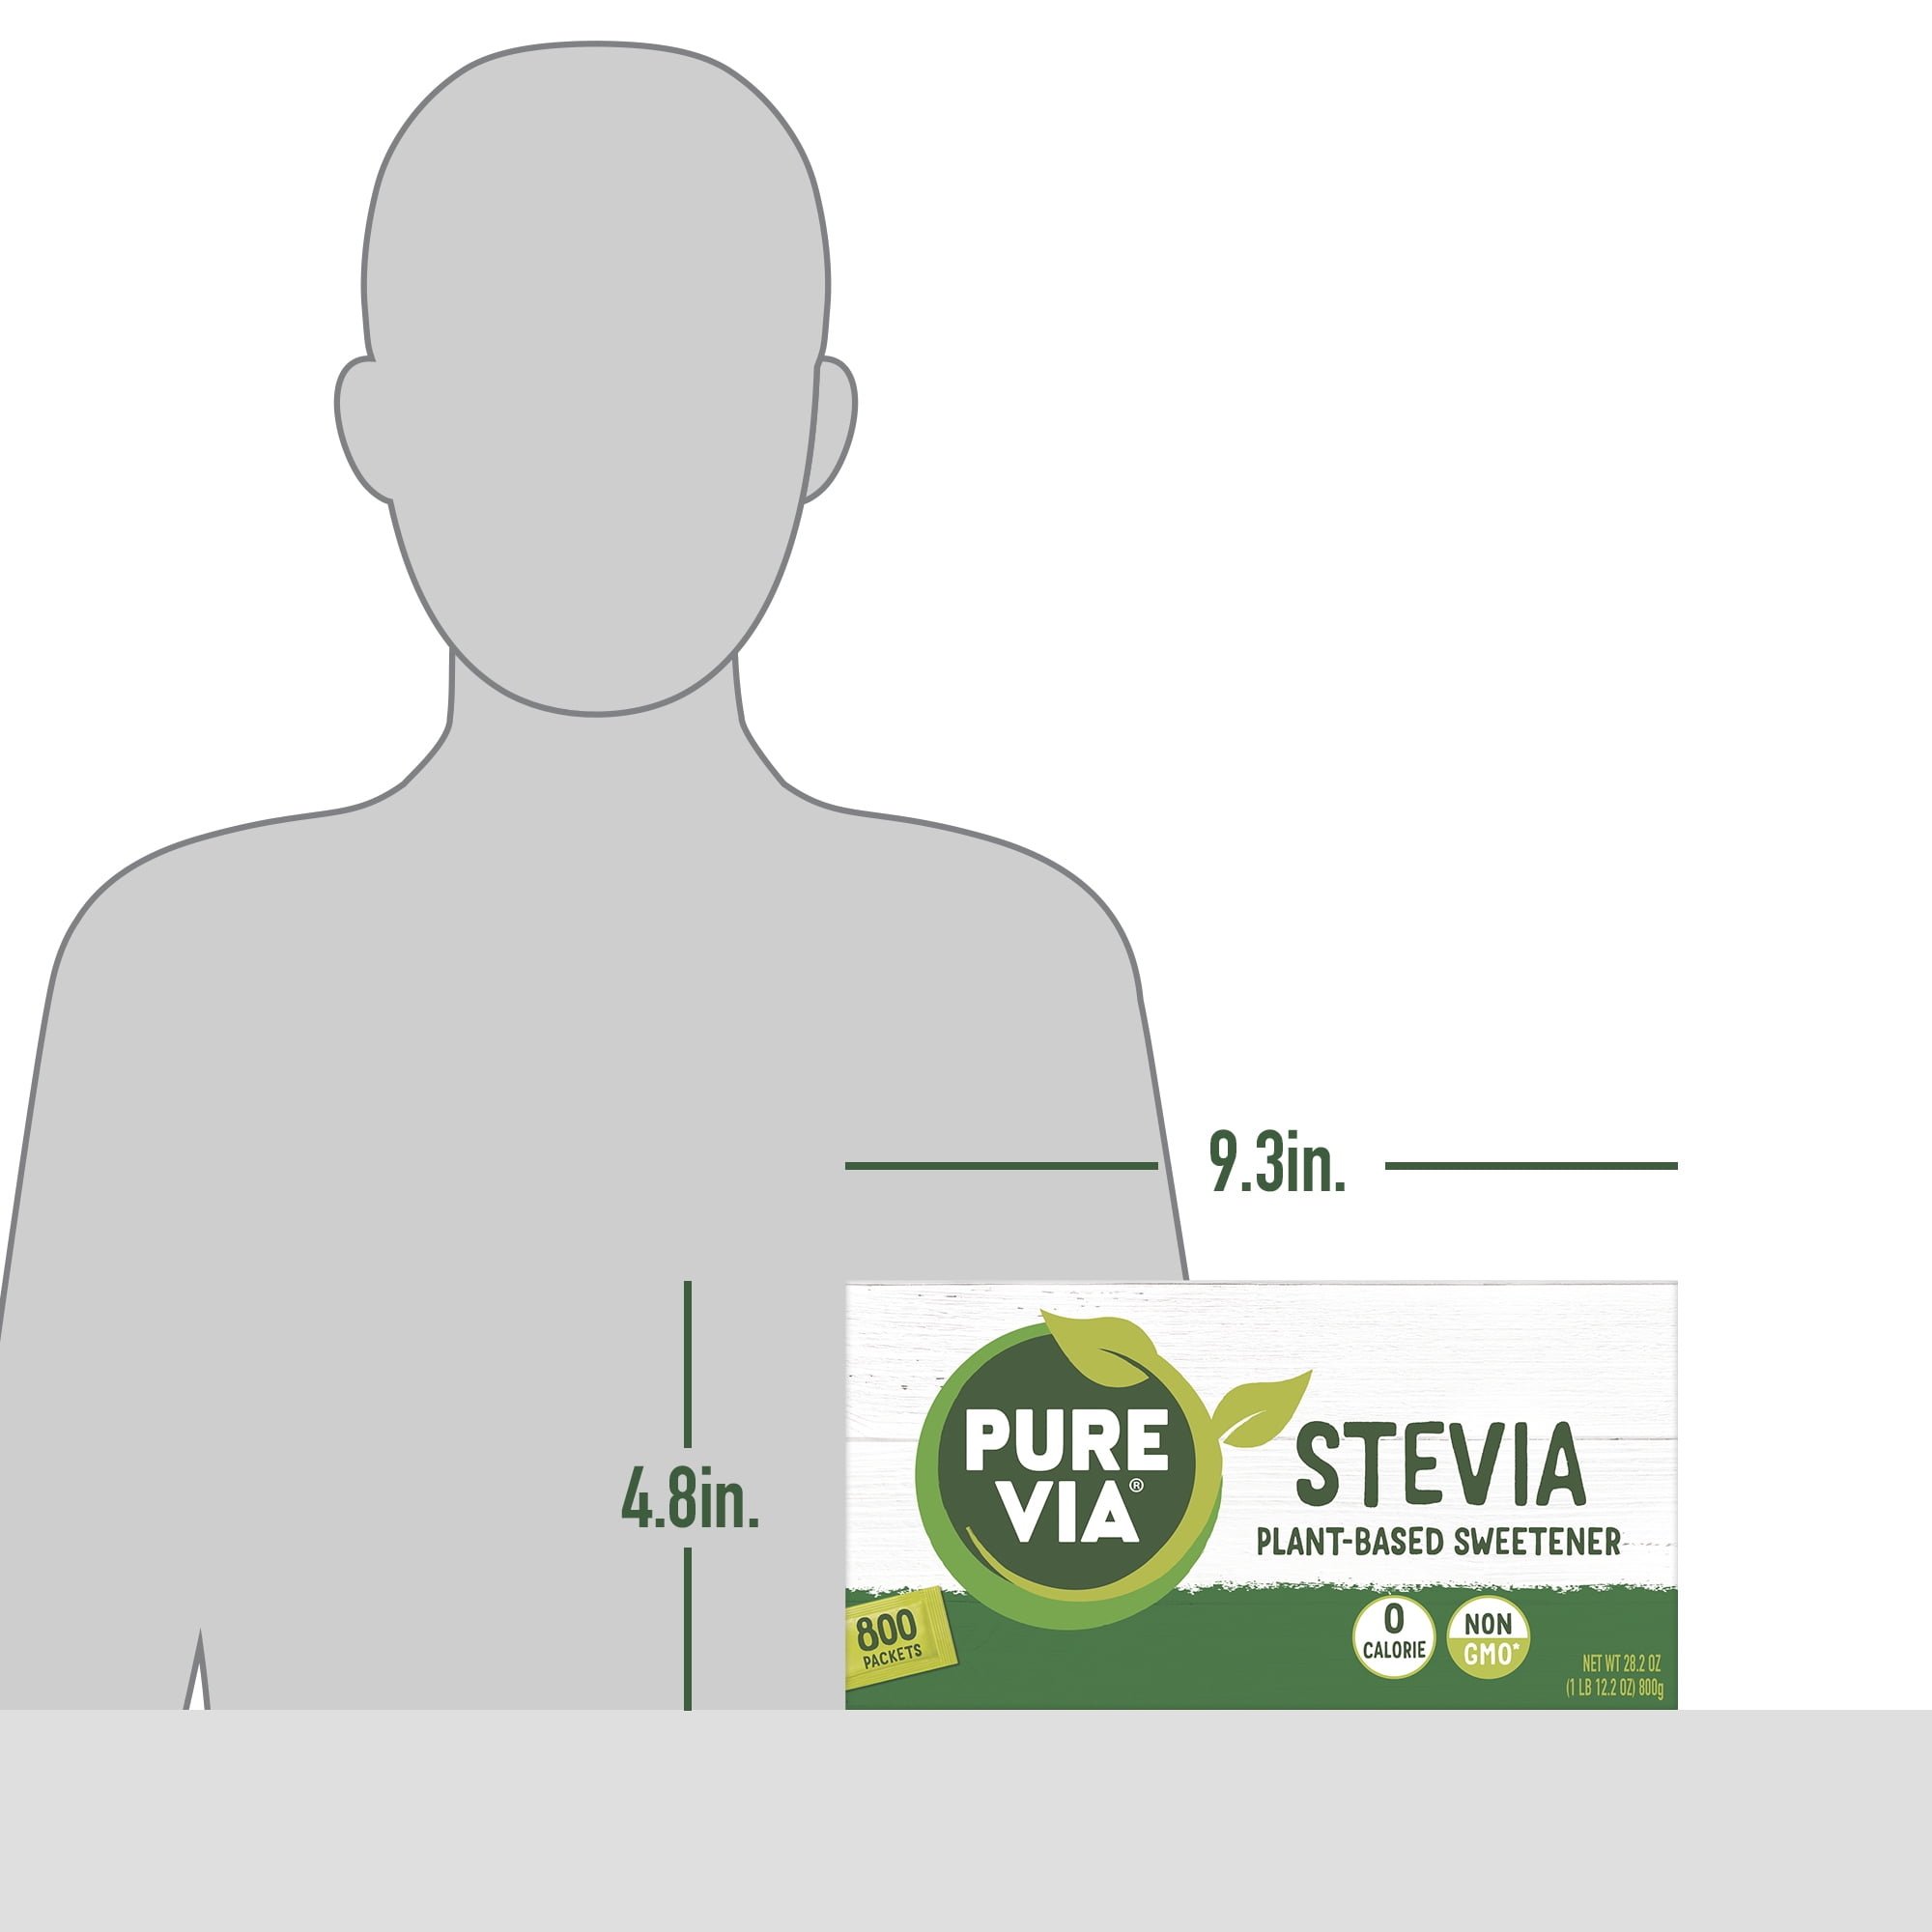 Sucre de canne & Stevia* - Pure Via